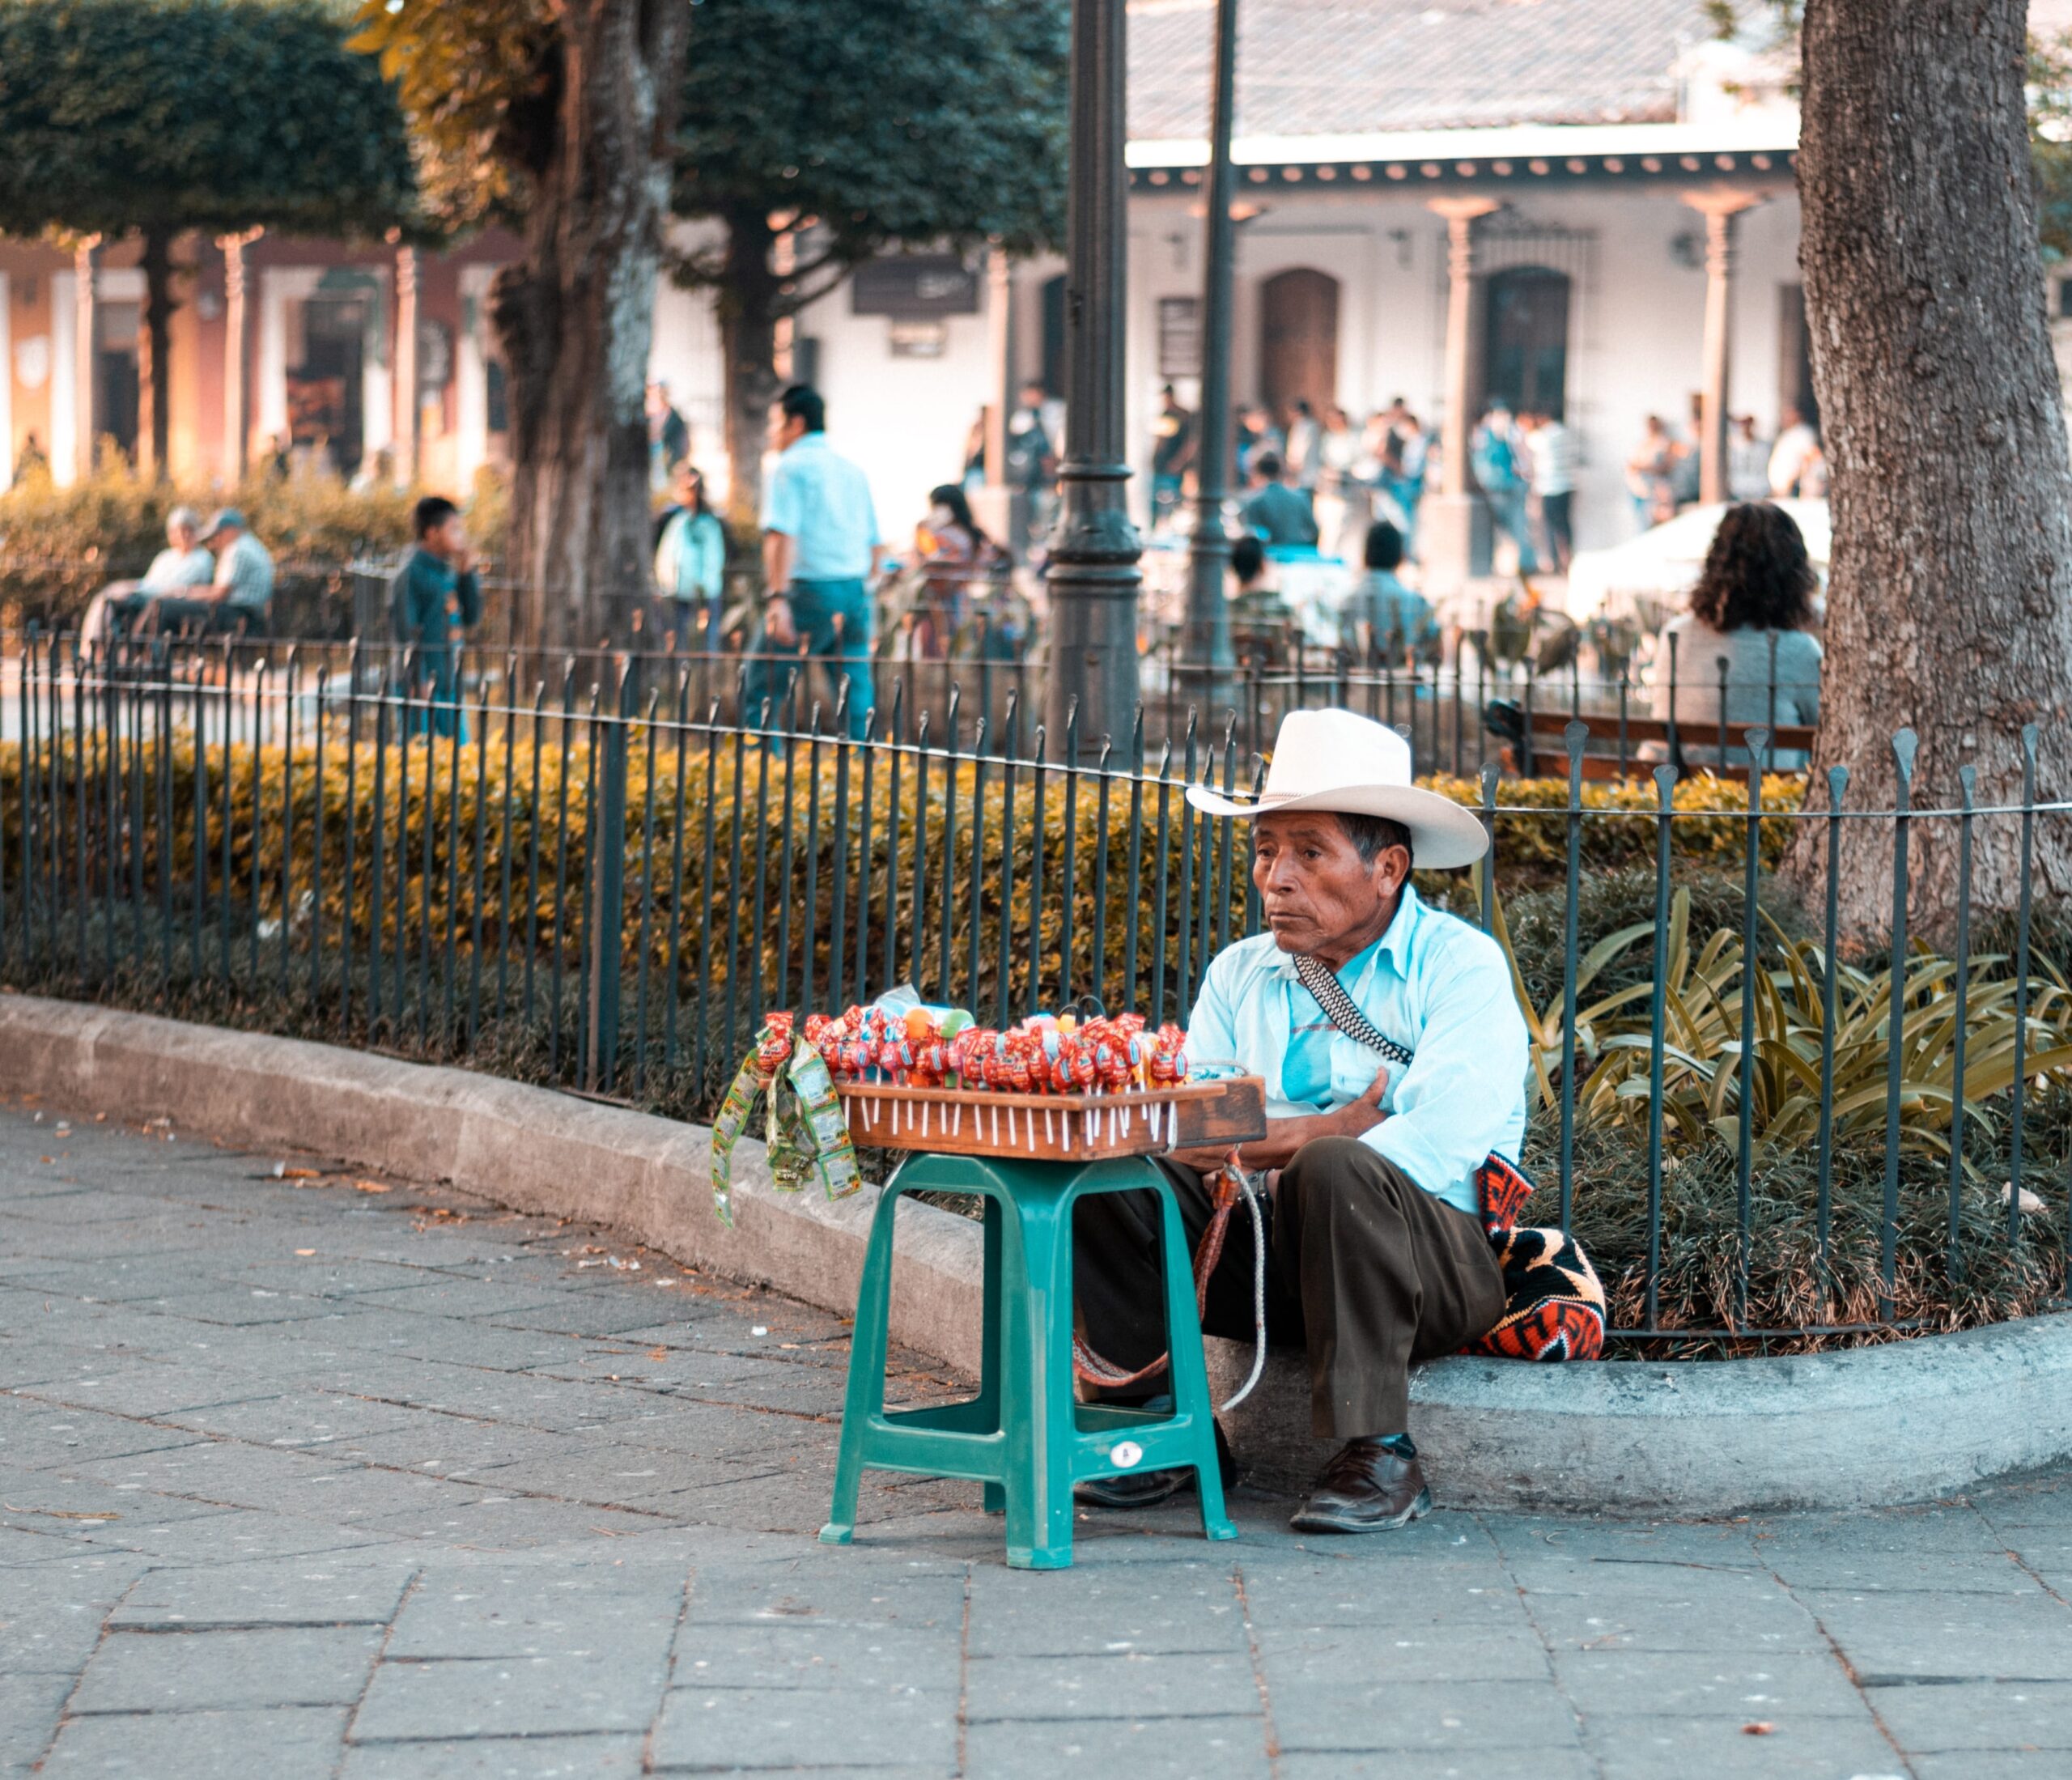 Street vendor in a central plaza in Antigua Guatemala